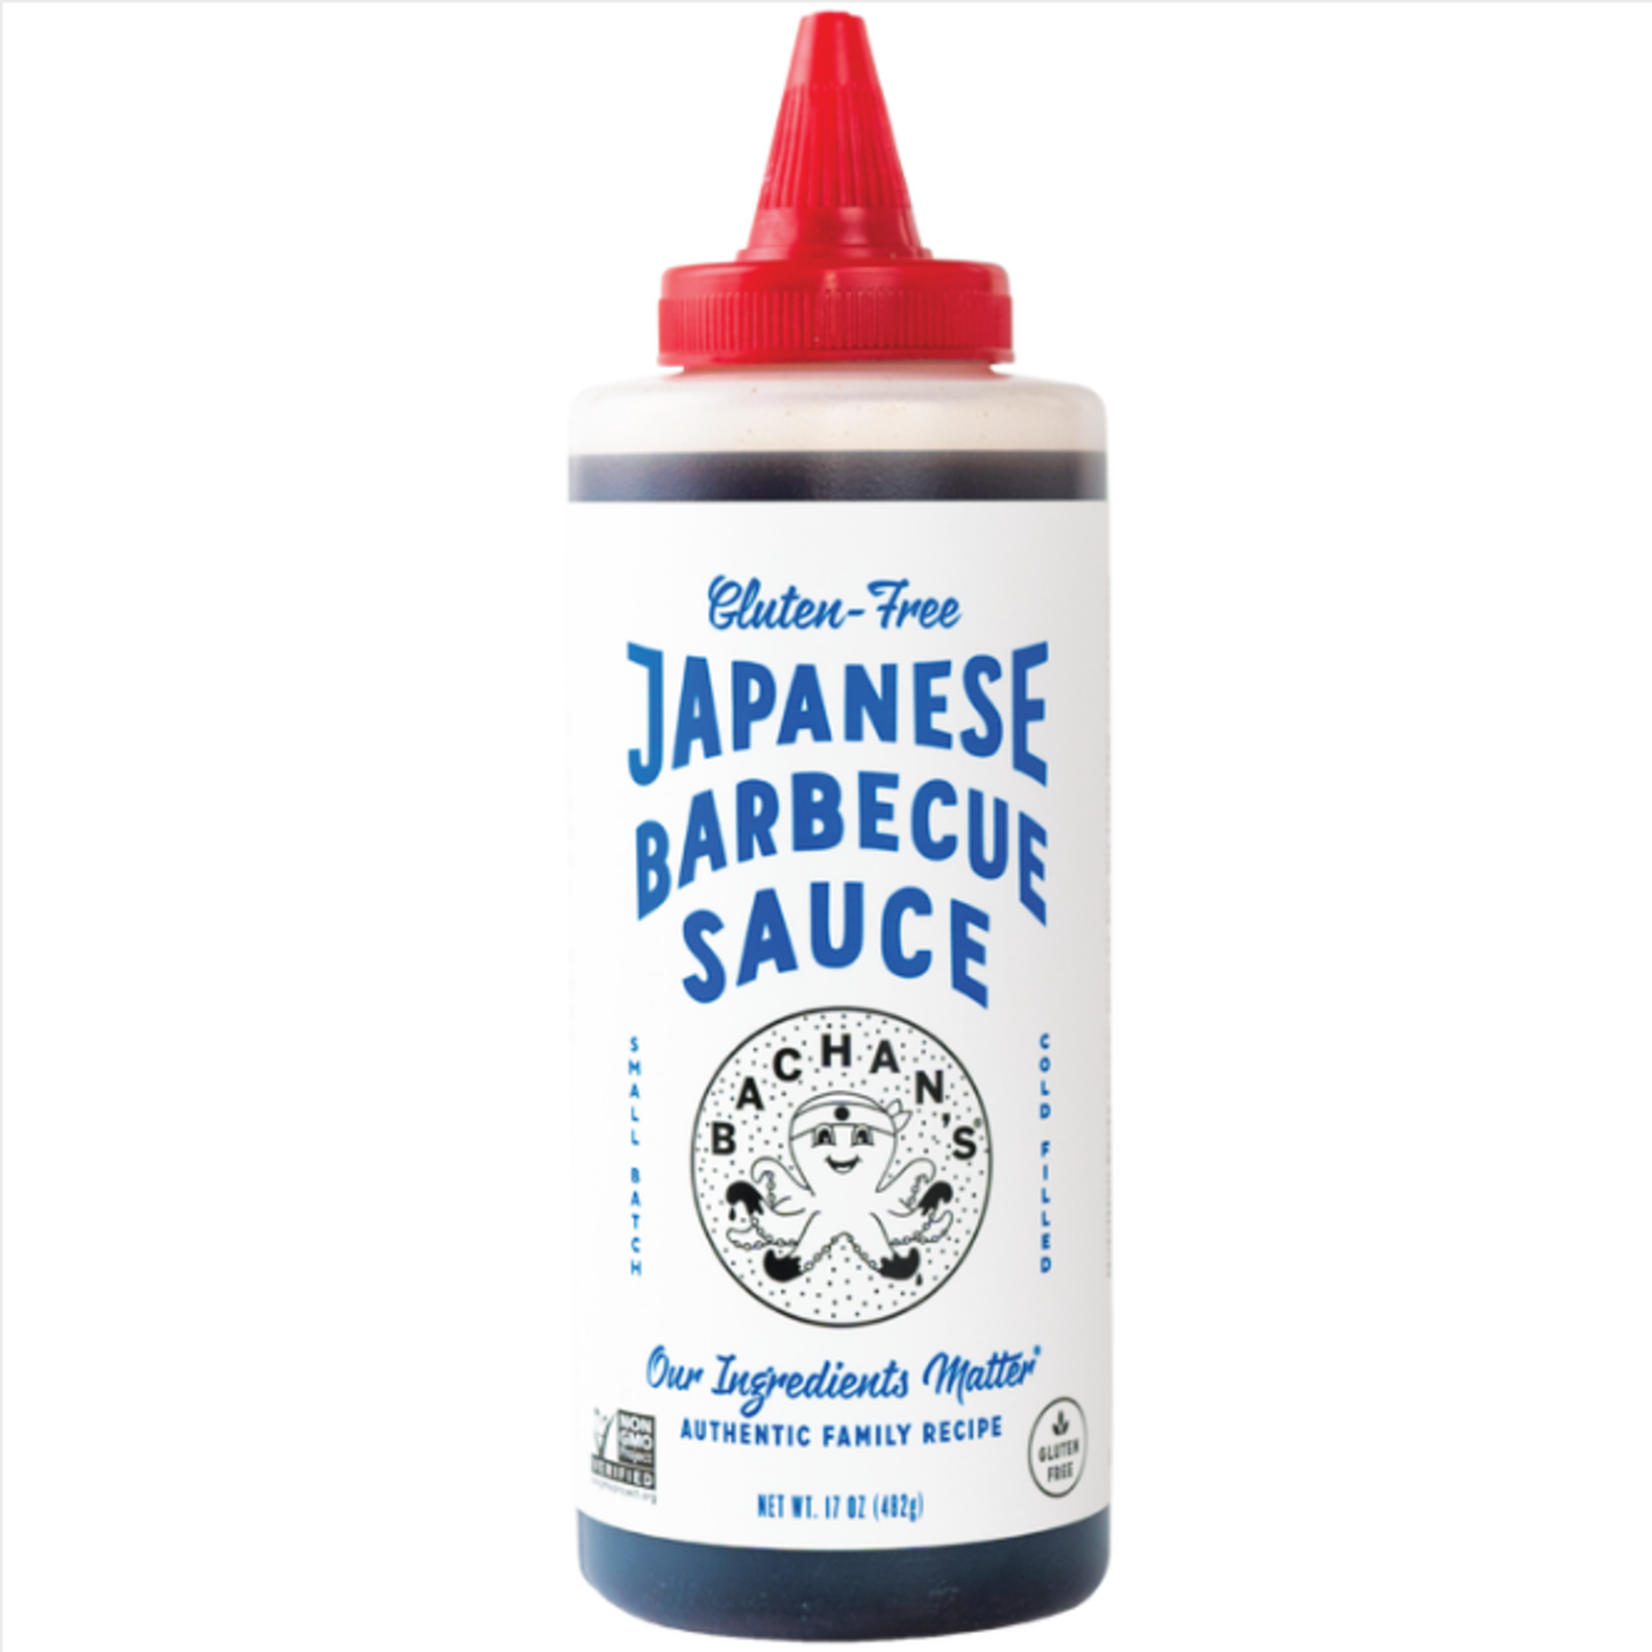 Bachan's Japanese BBQ Sauce - Gluten-Free